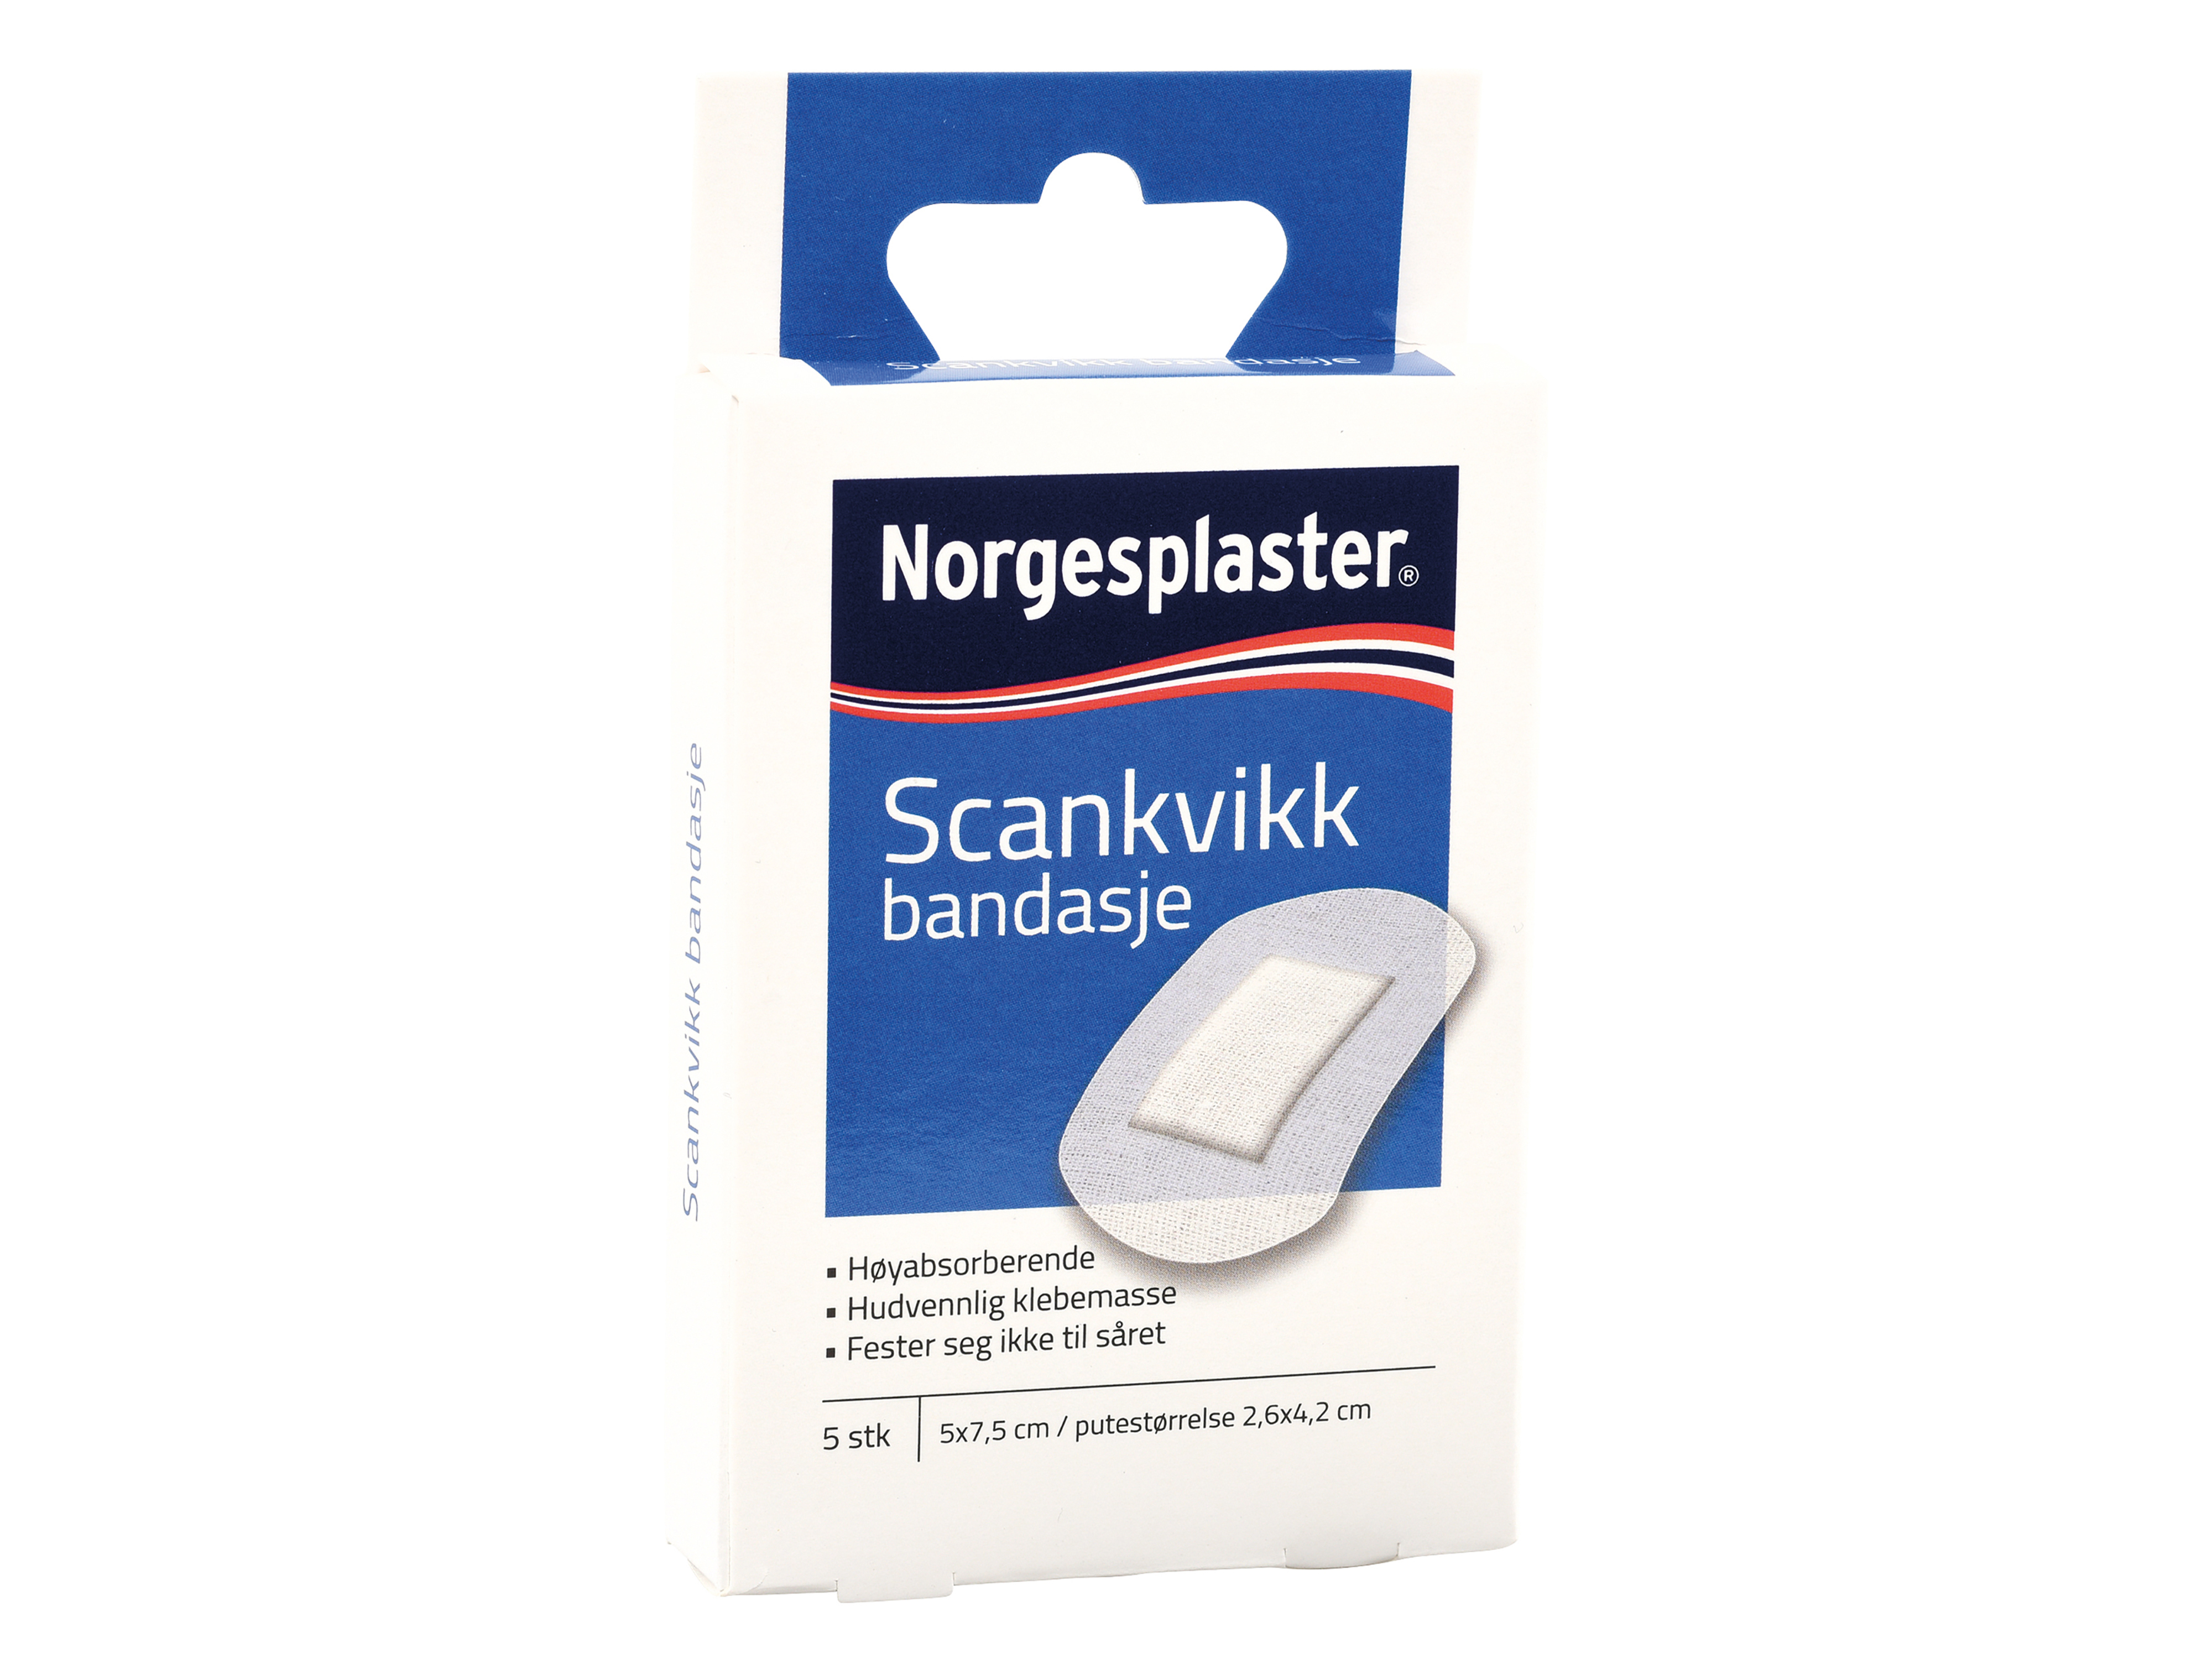 Norgesplaster Scankvikk bandasje, 5x7,5 cm, 5 stk.